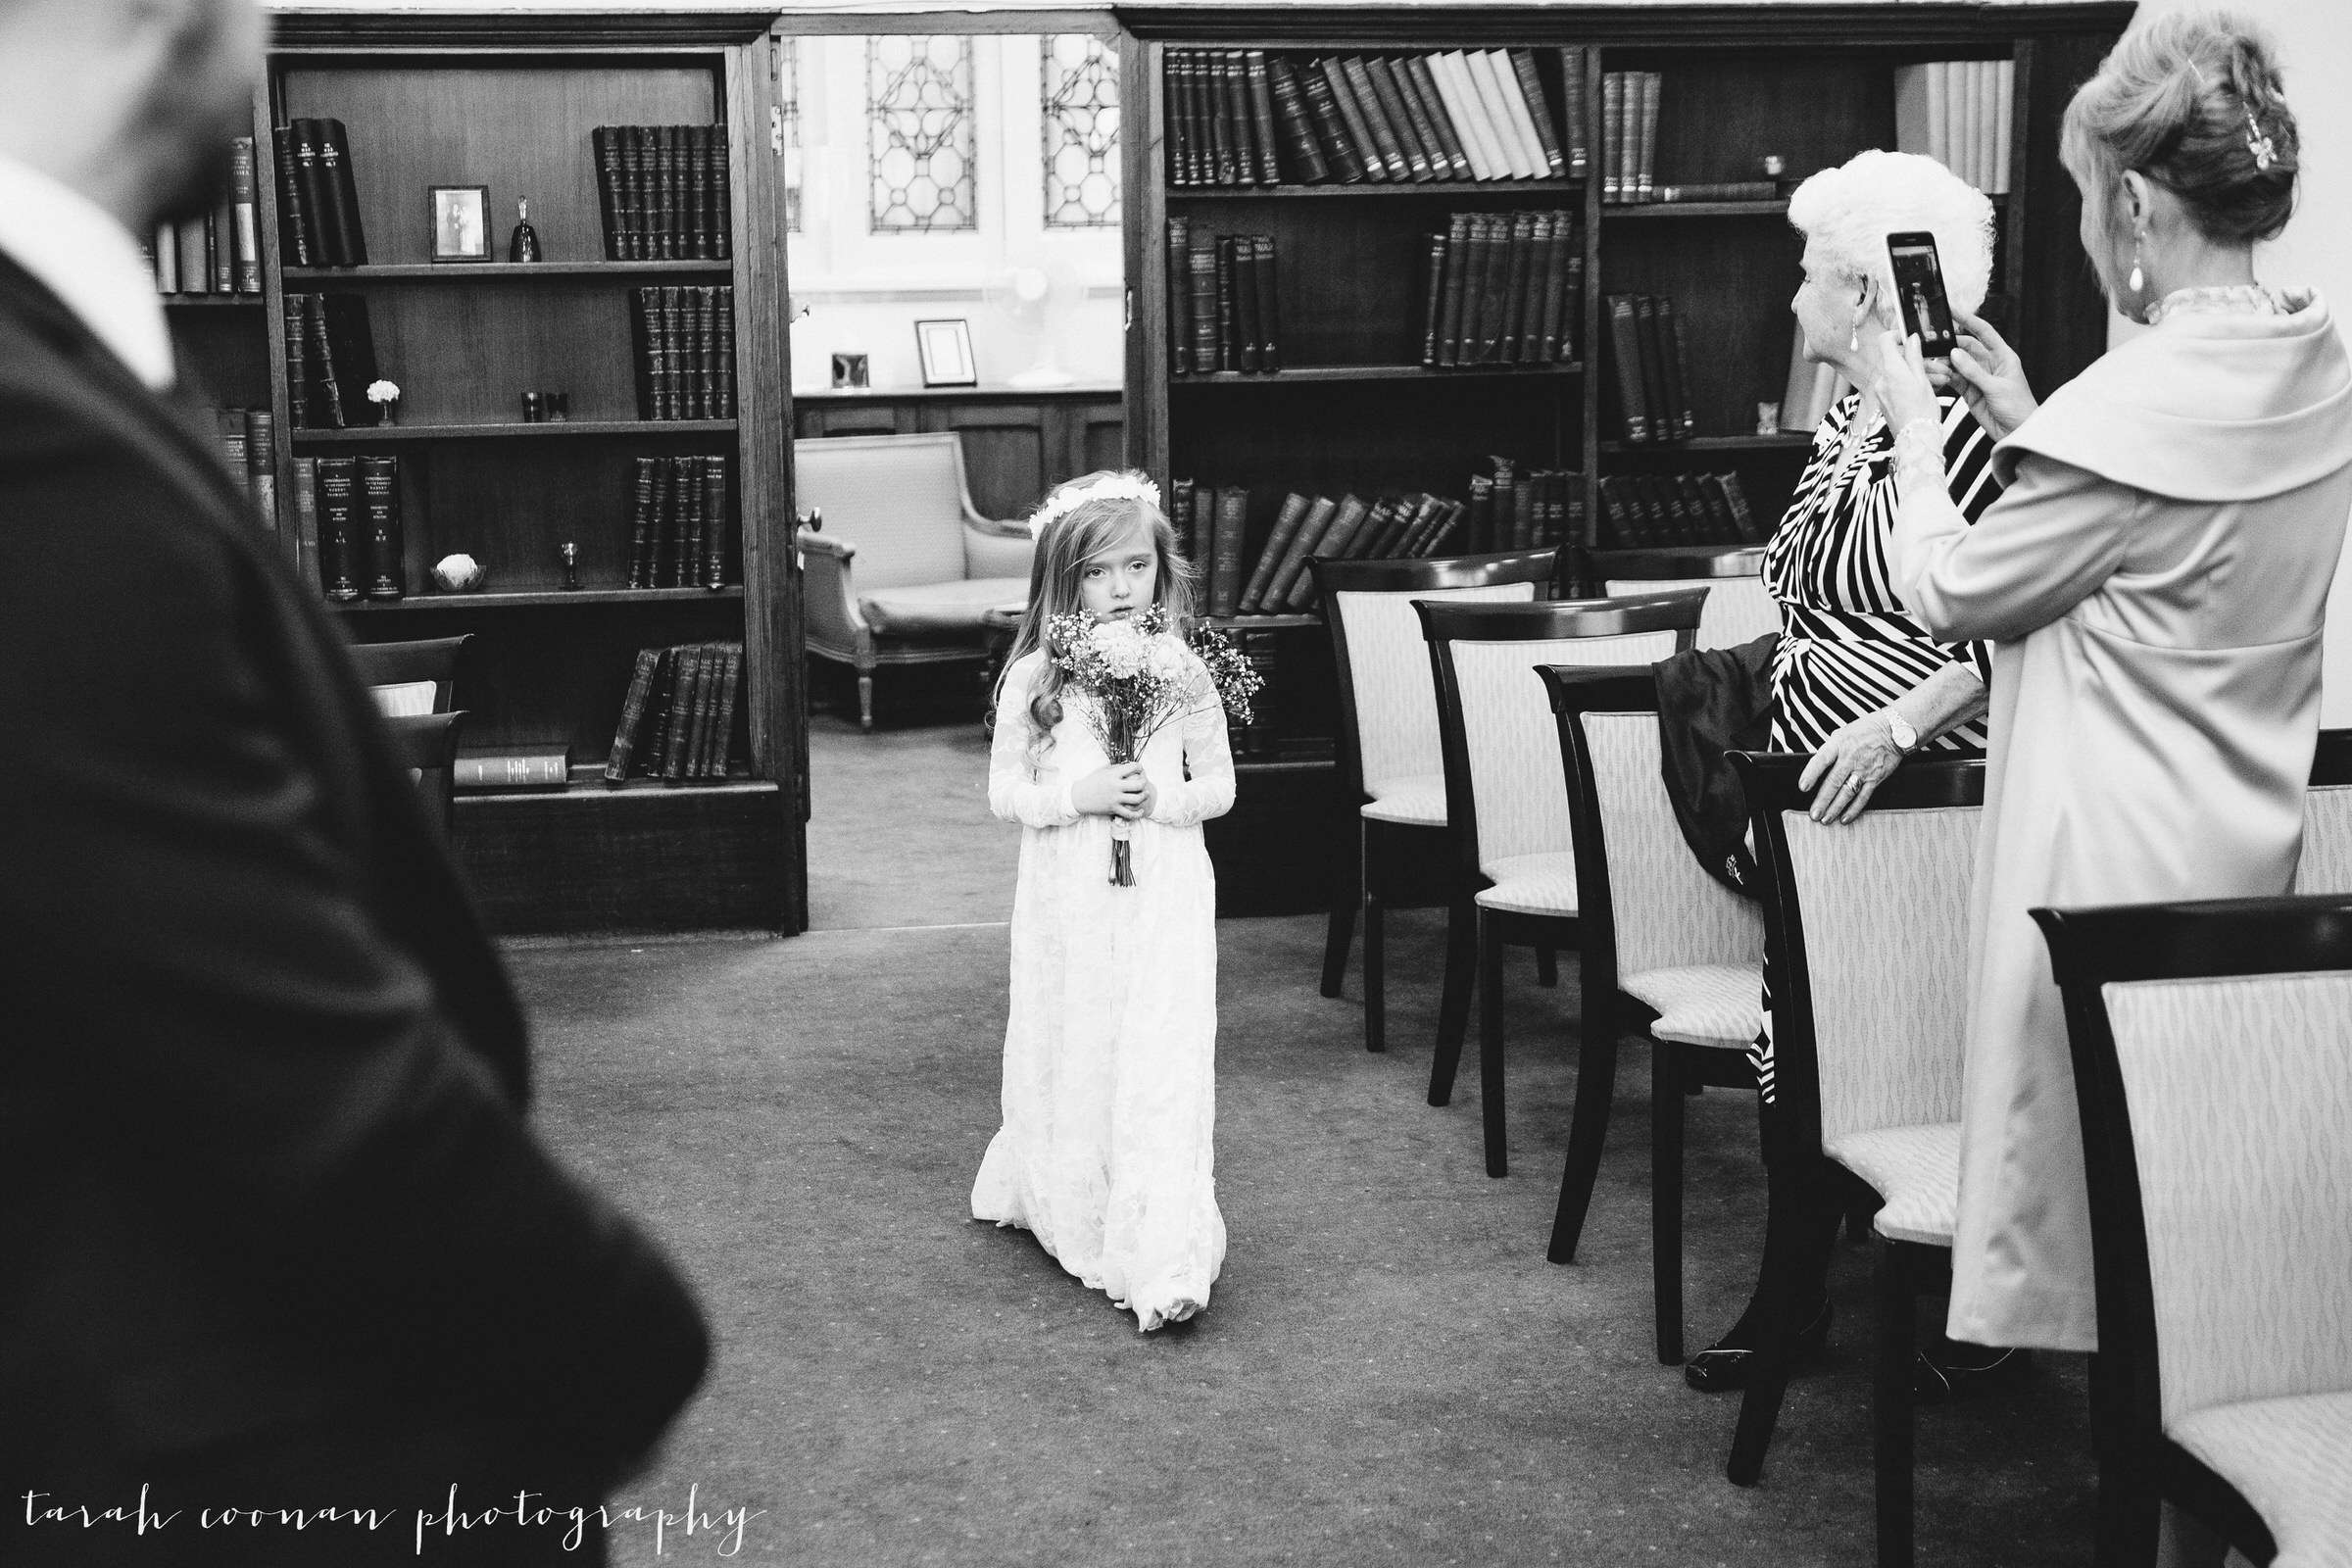 Mayfair Library wedding - Jo & Stephen